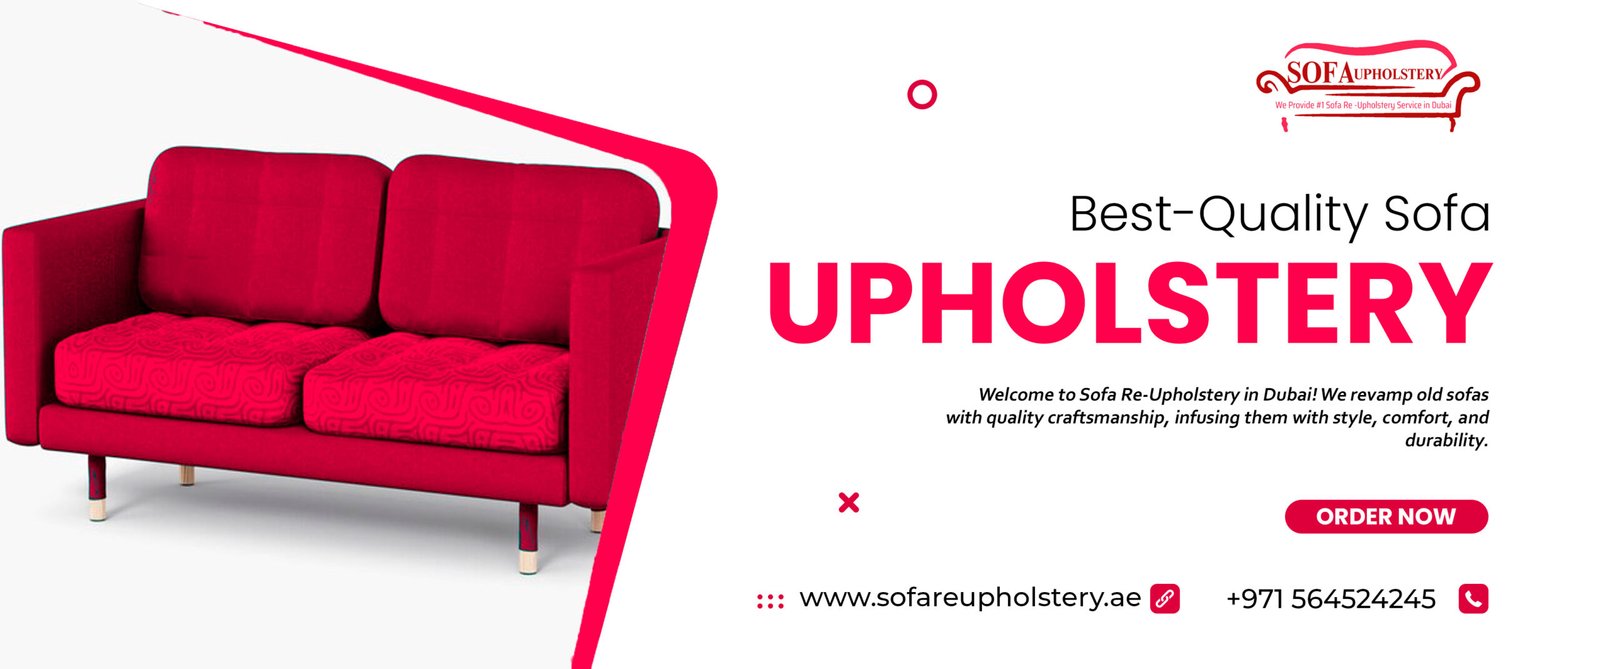 Best Quality Sofa Upholstery iin dubai